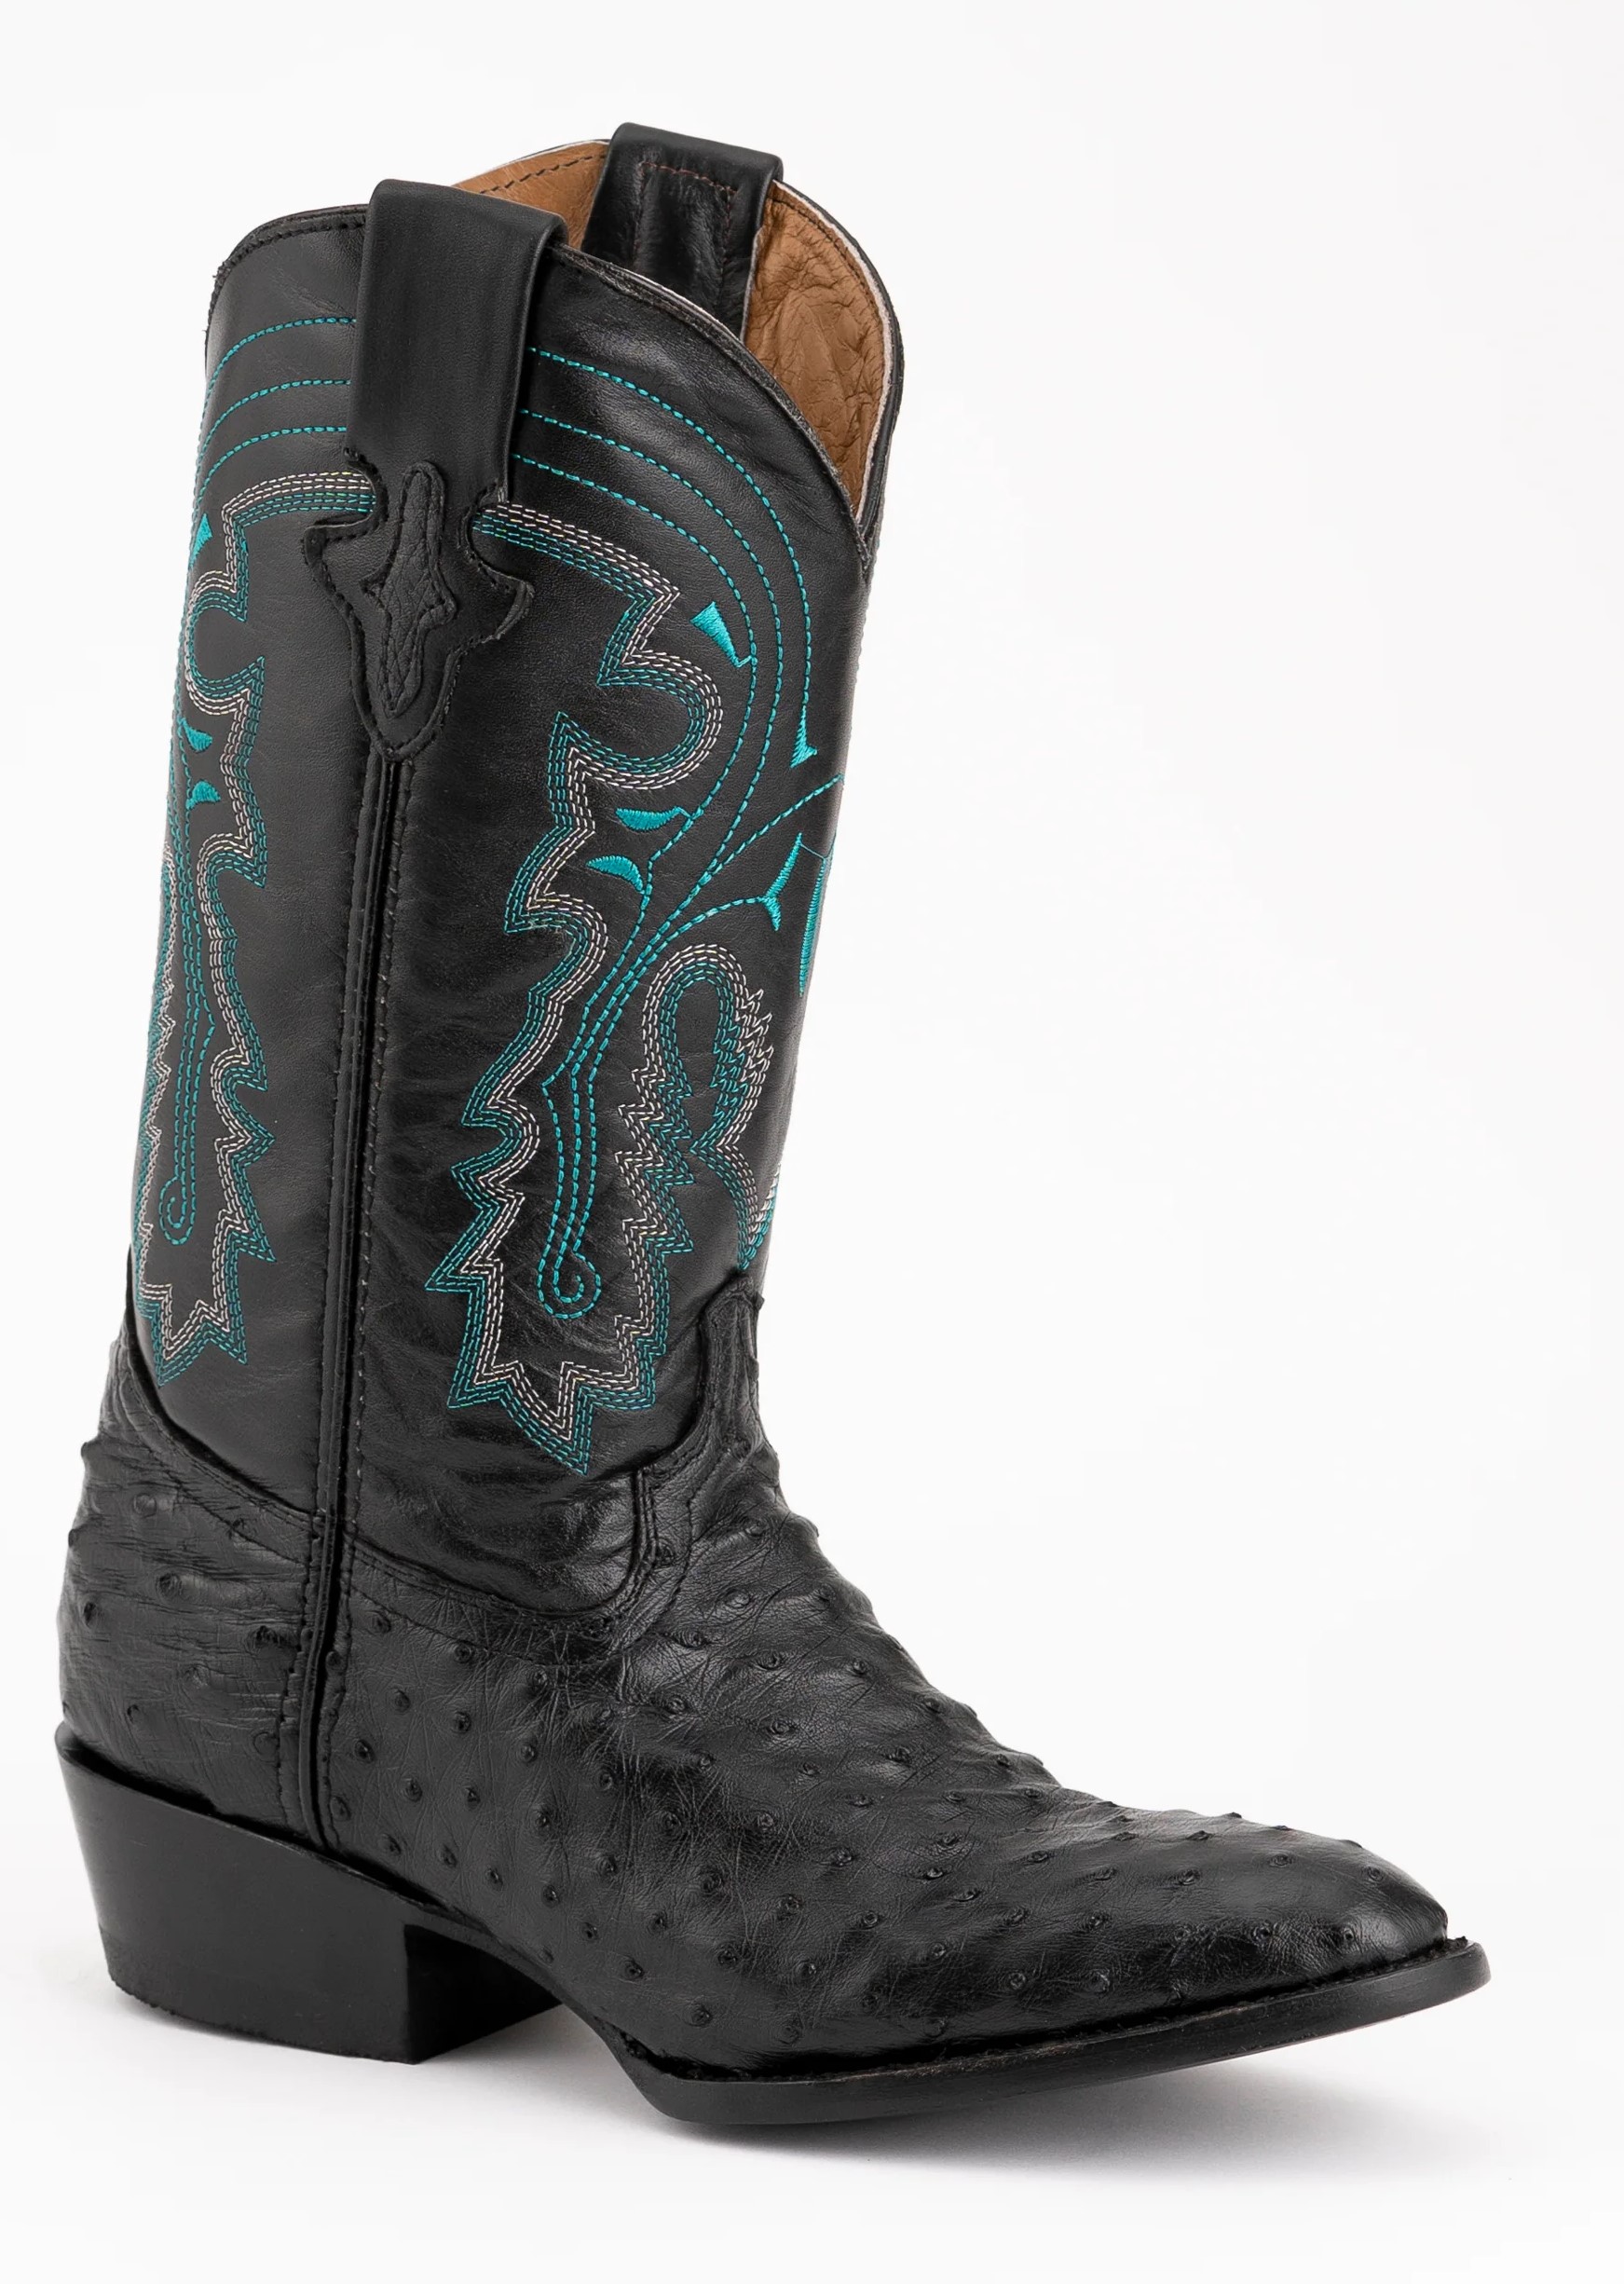 Ferrini "Colt" Black Tabac Genuine Full Quill Ostrich Round Toe Cowboy Boots 10111-04